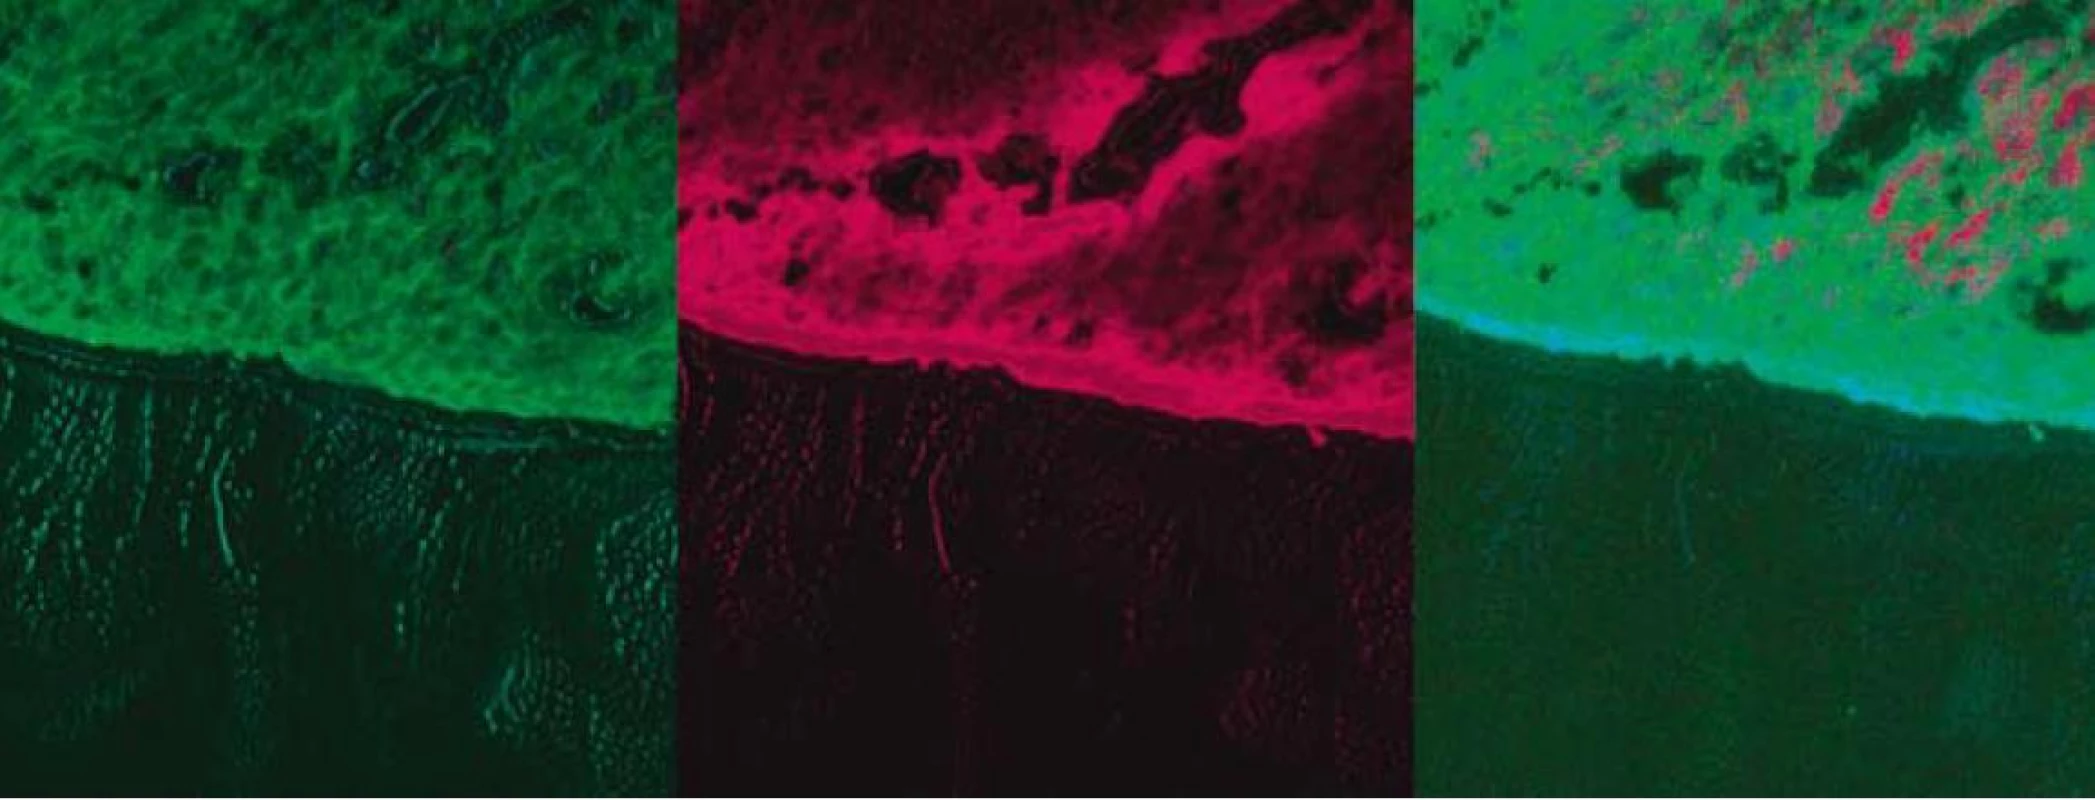 Fluorescenčná štúdia s použitím fotosenzitizátora ALA – tubulárny adenóm rekta s LGD.
Fig. 2. Fluorescence study with photosensitizer ALA – tubular rectal adenoma with LGD.